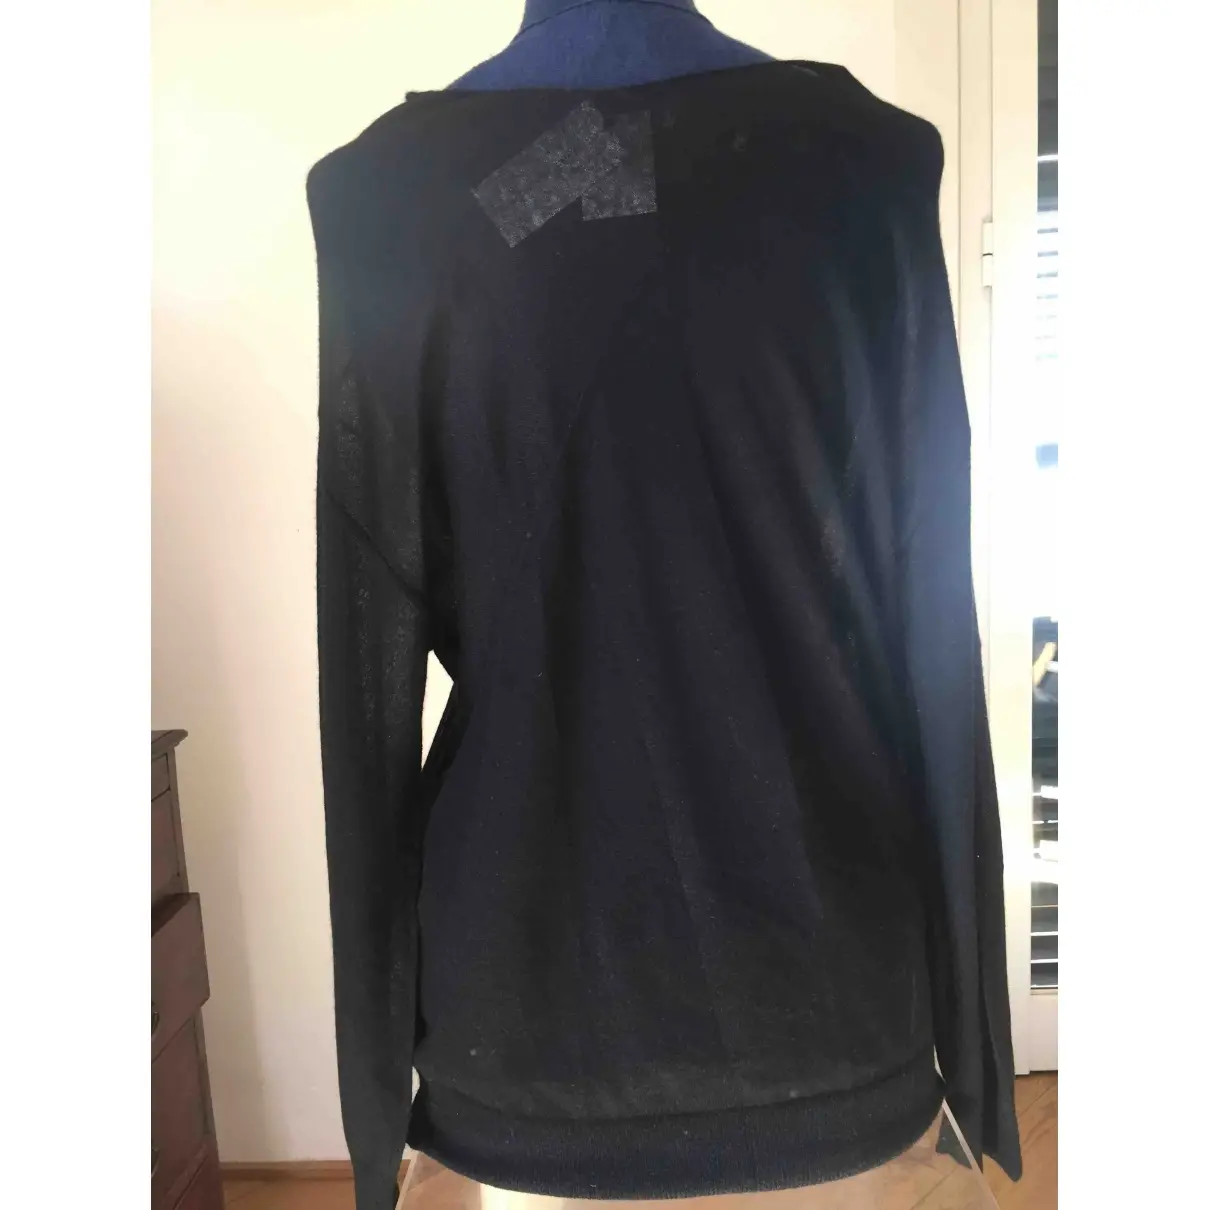 Dries Van Noten Cashmere jumper for sale - Vintage